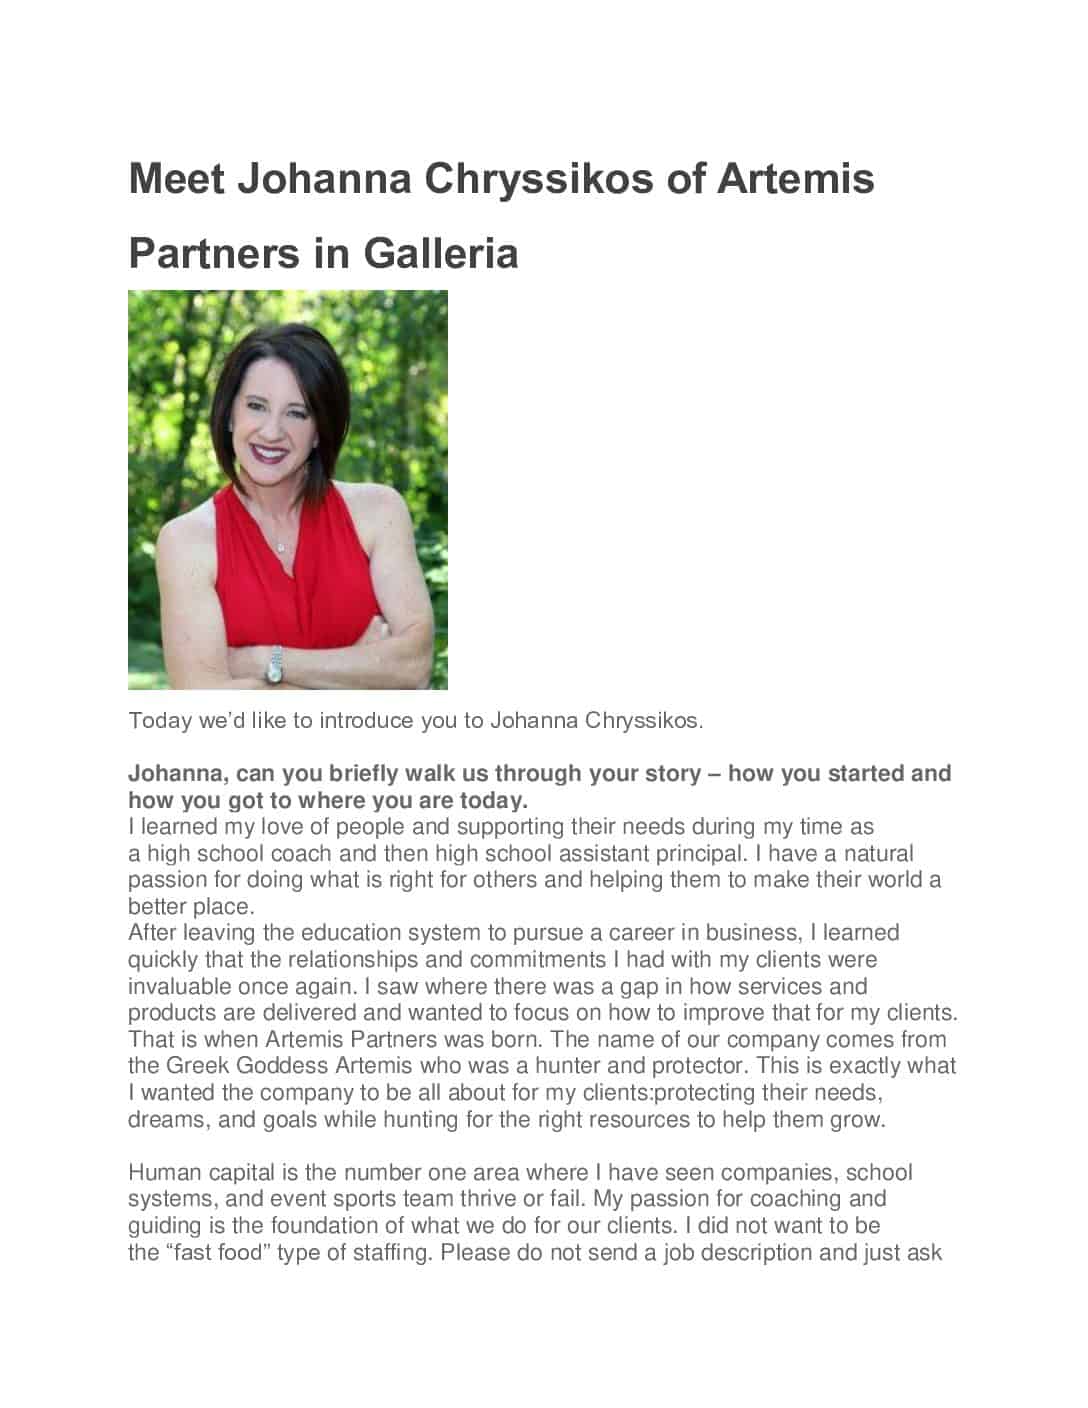 Artemis Partners – Voyage Houston Magazine